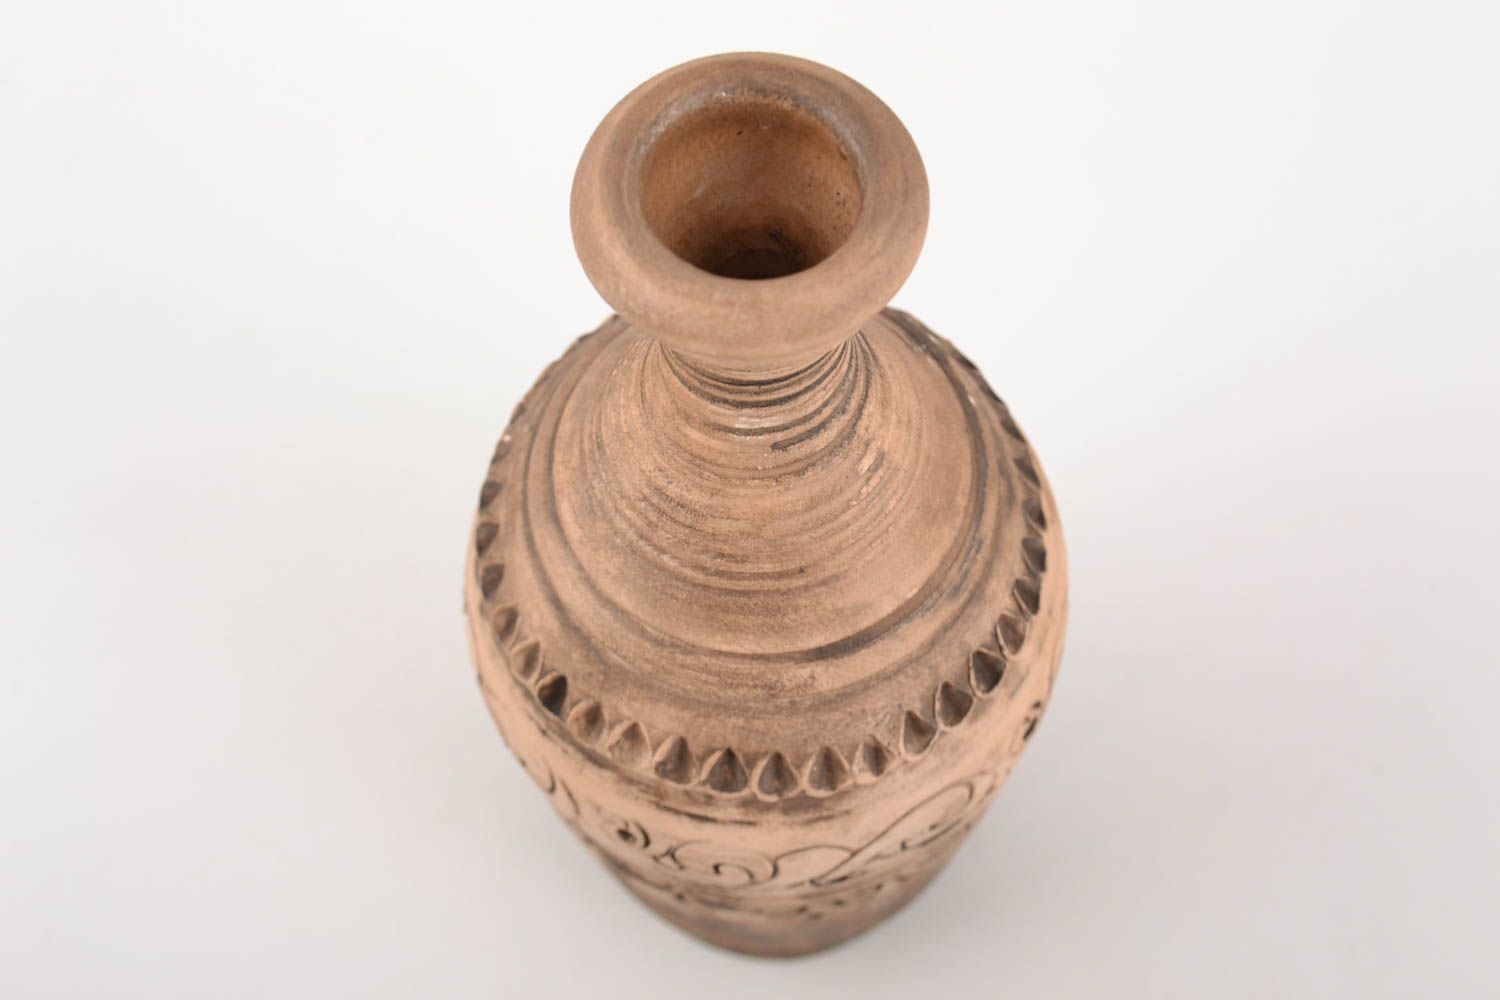 15 oz ceramic bottle shape ceramic pitcher carafe made of white clay 0,9 lb photo 3